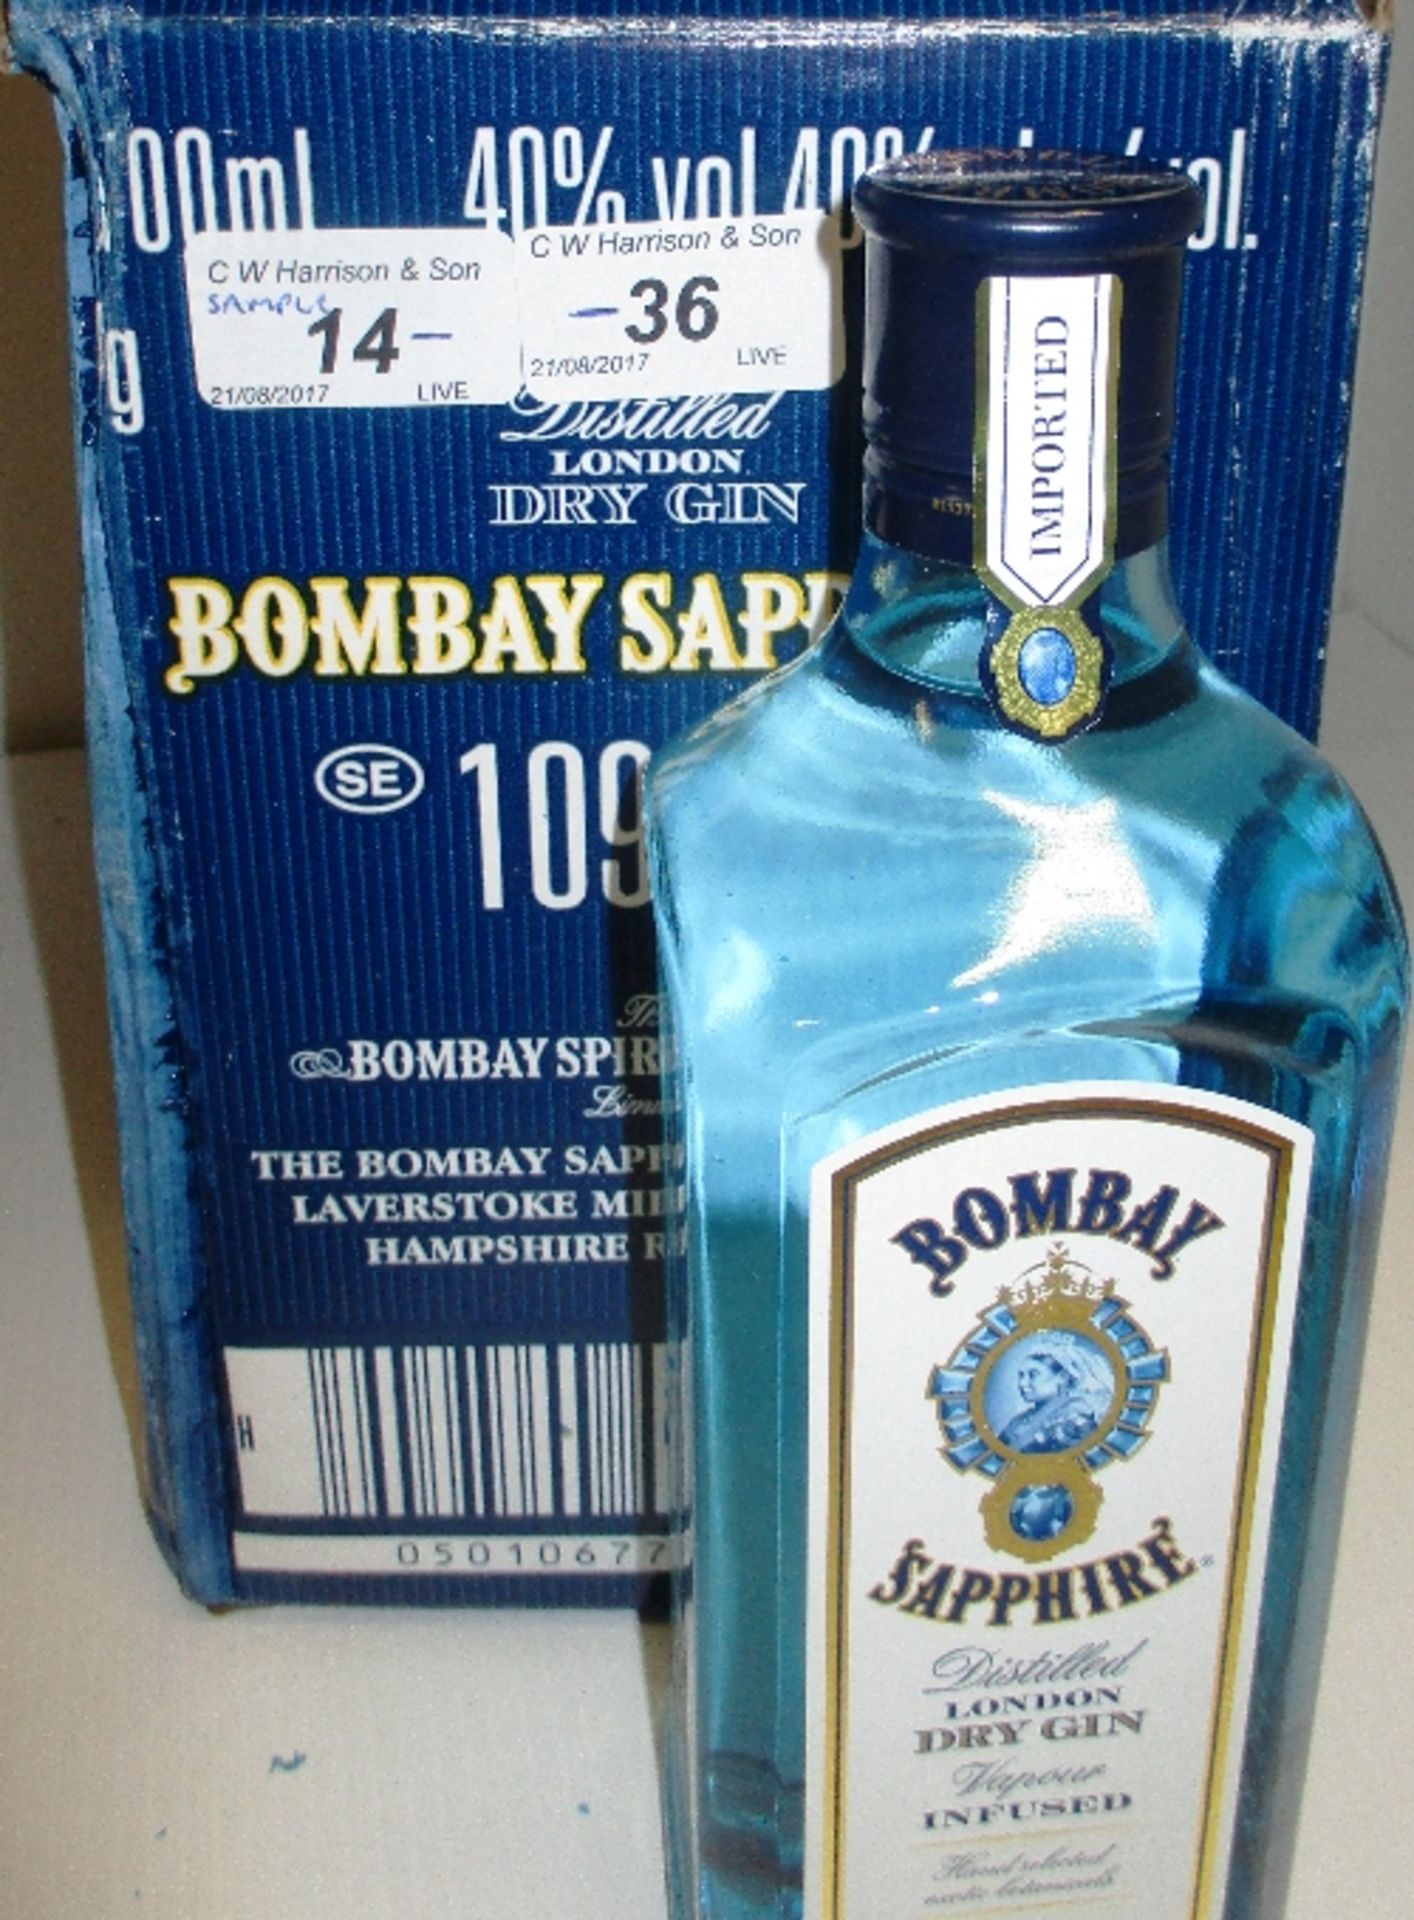 6 x 700ml bottles of Bombay Sapphire distilled London Dry Gin - 1 box